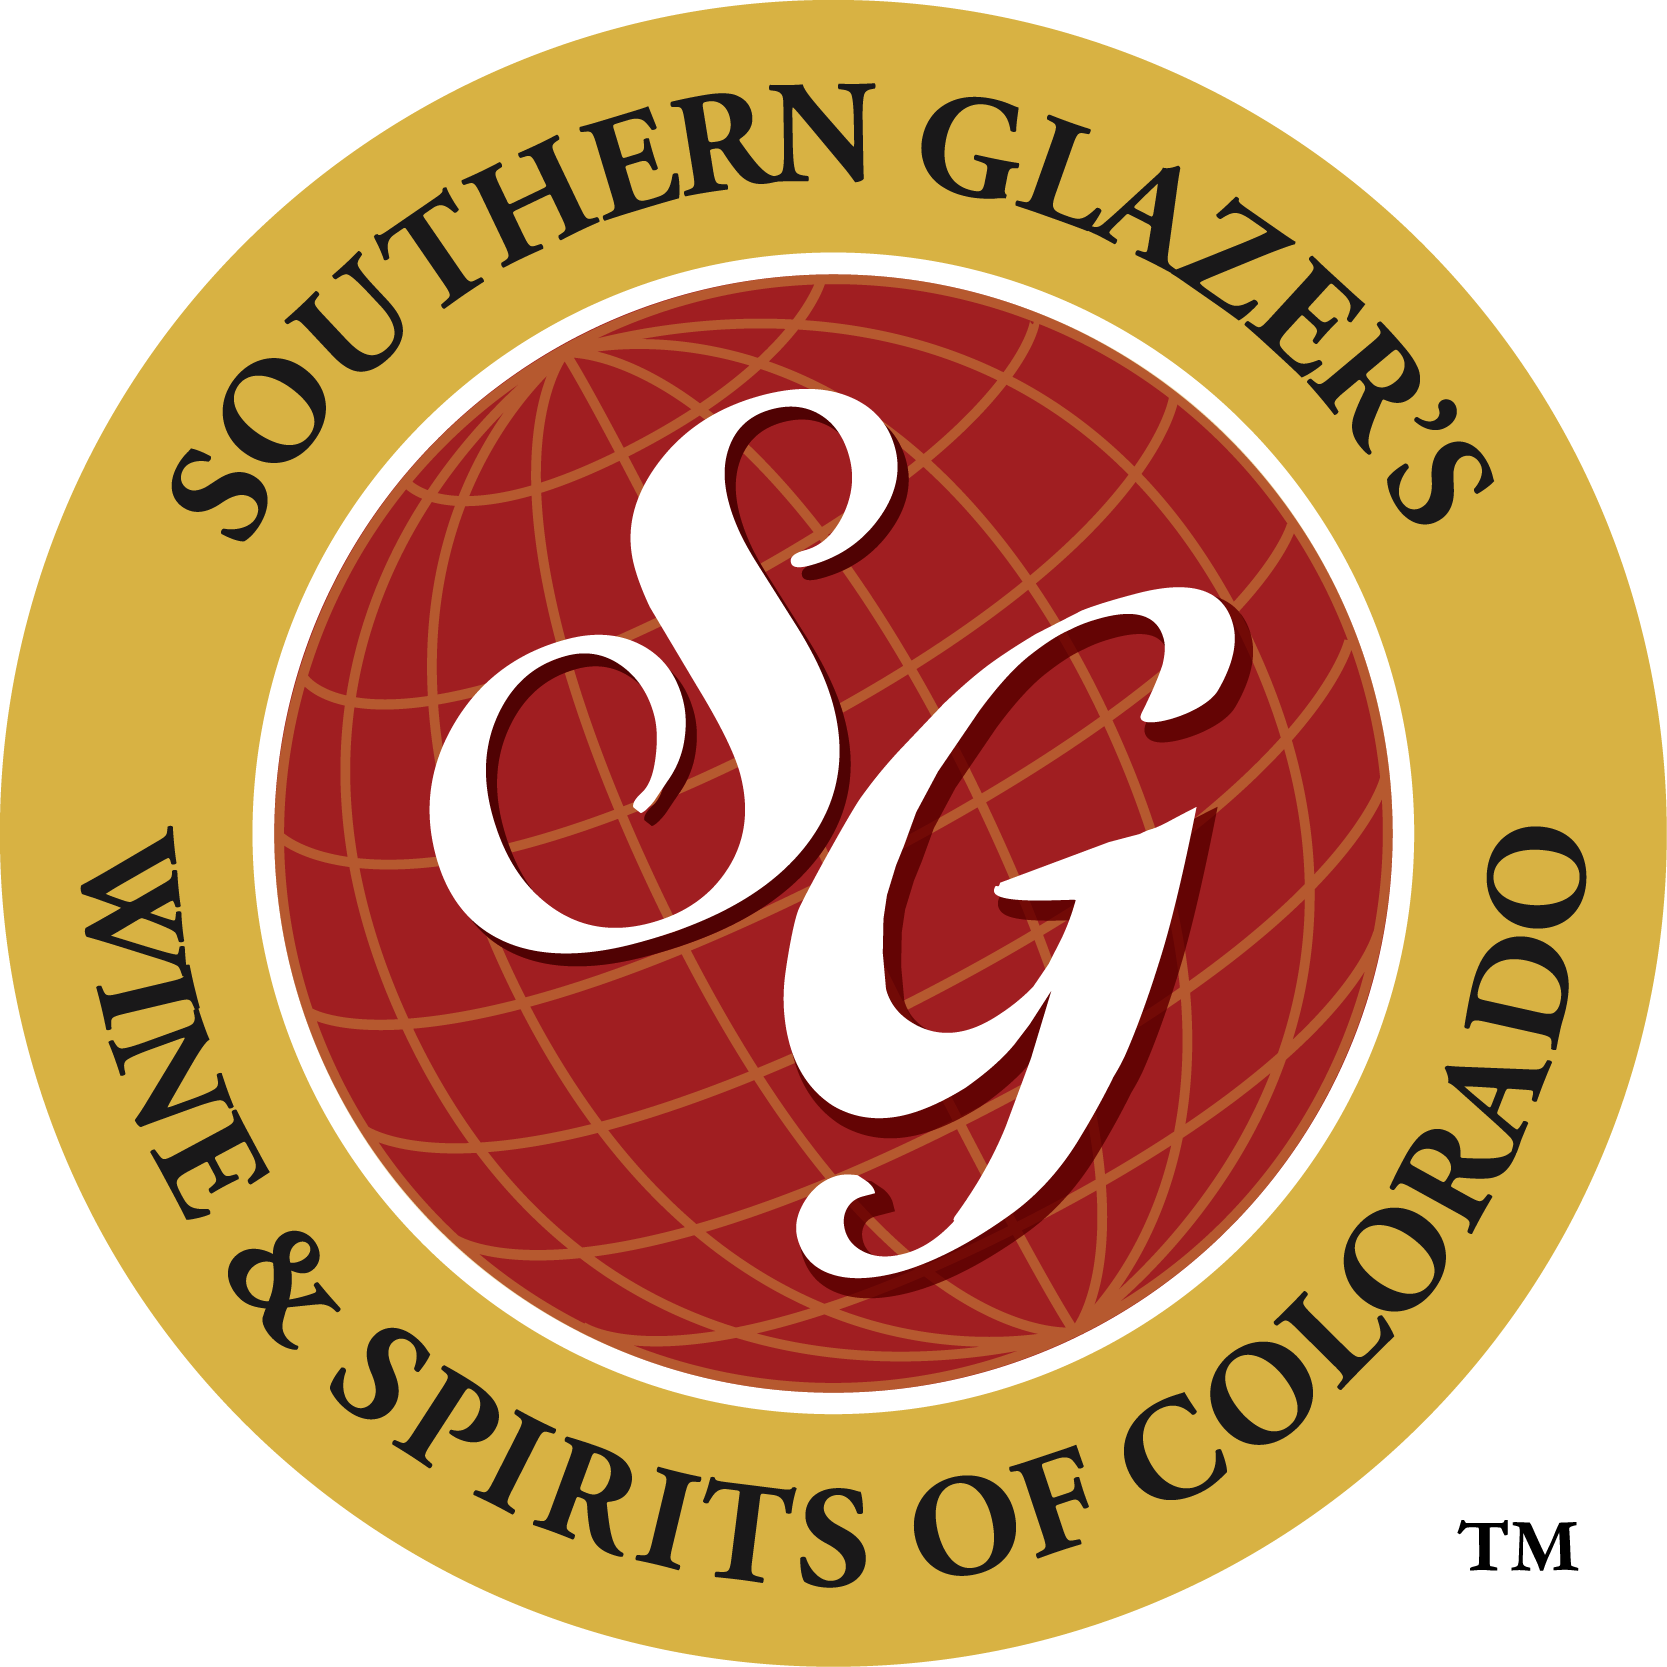 Southern Glazer’s Wine & Spirits of Colorado